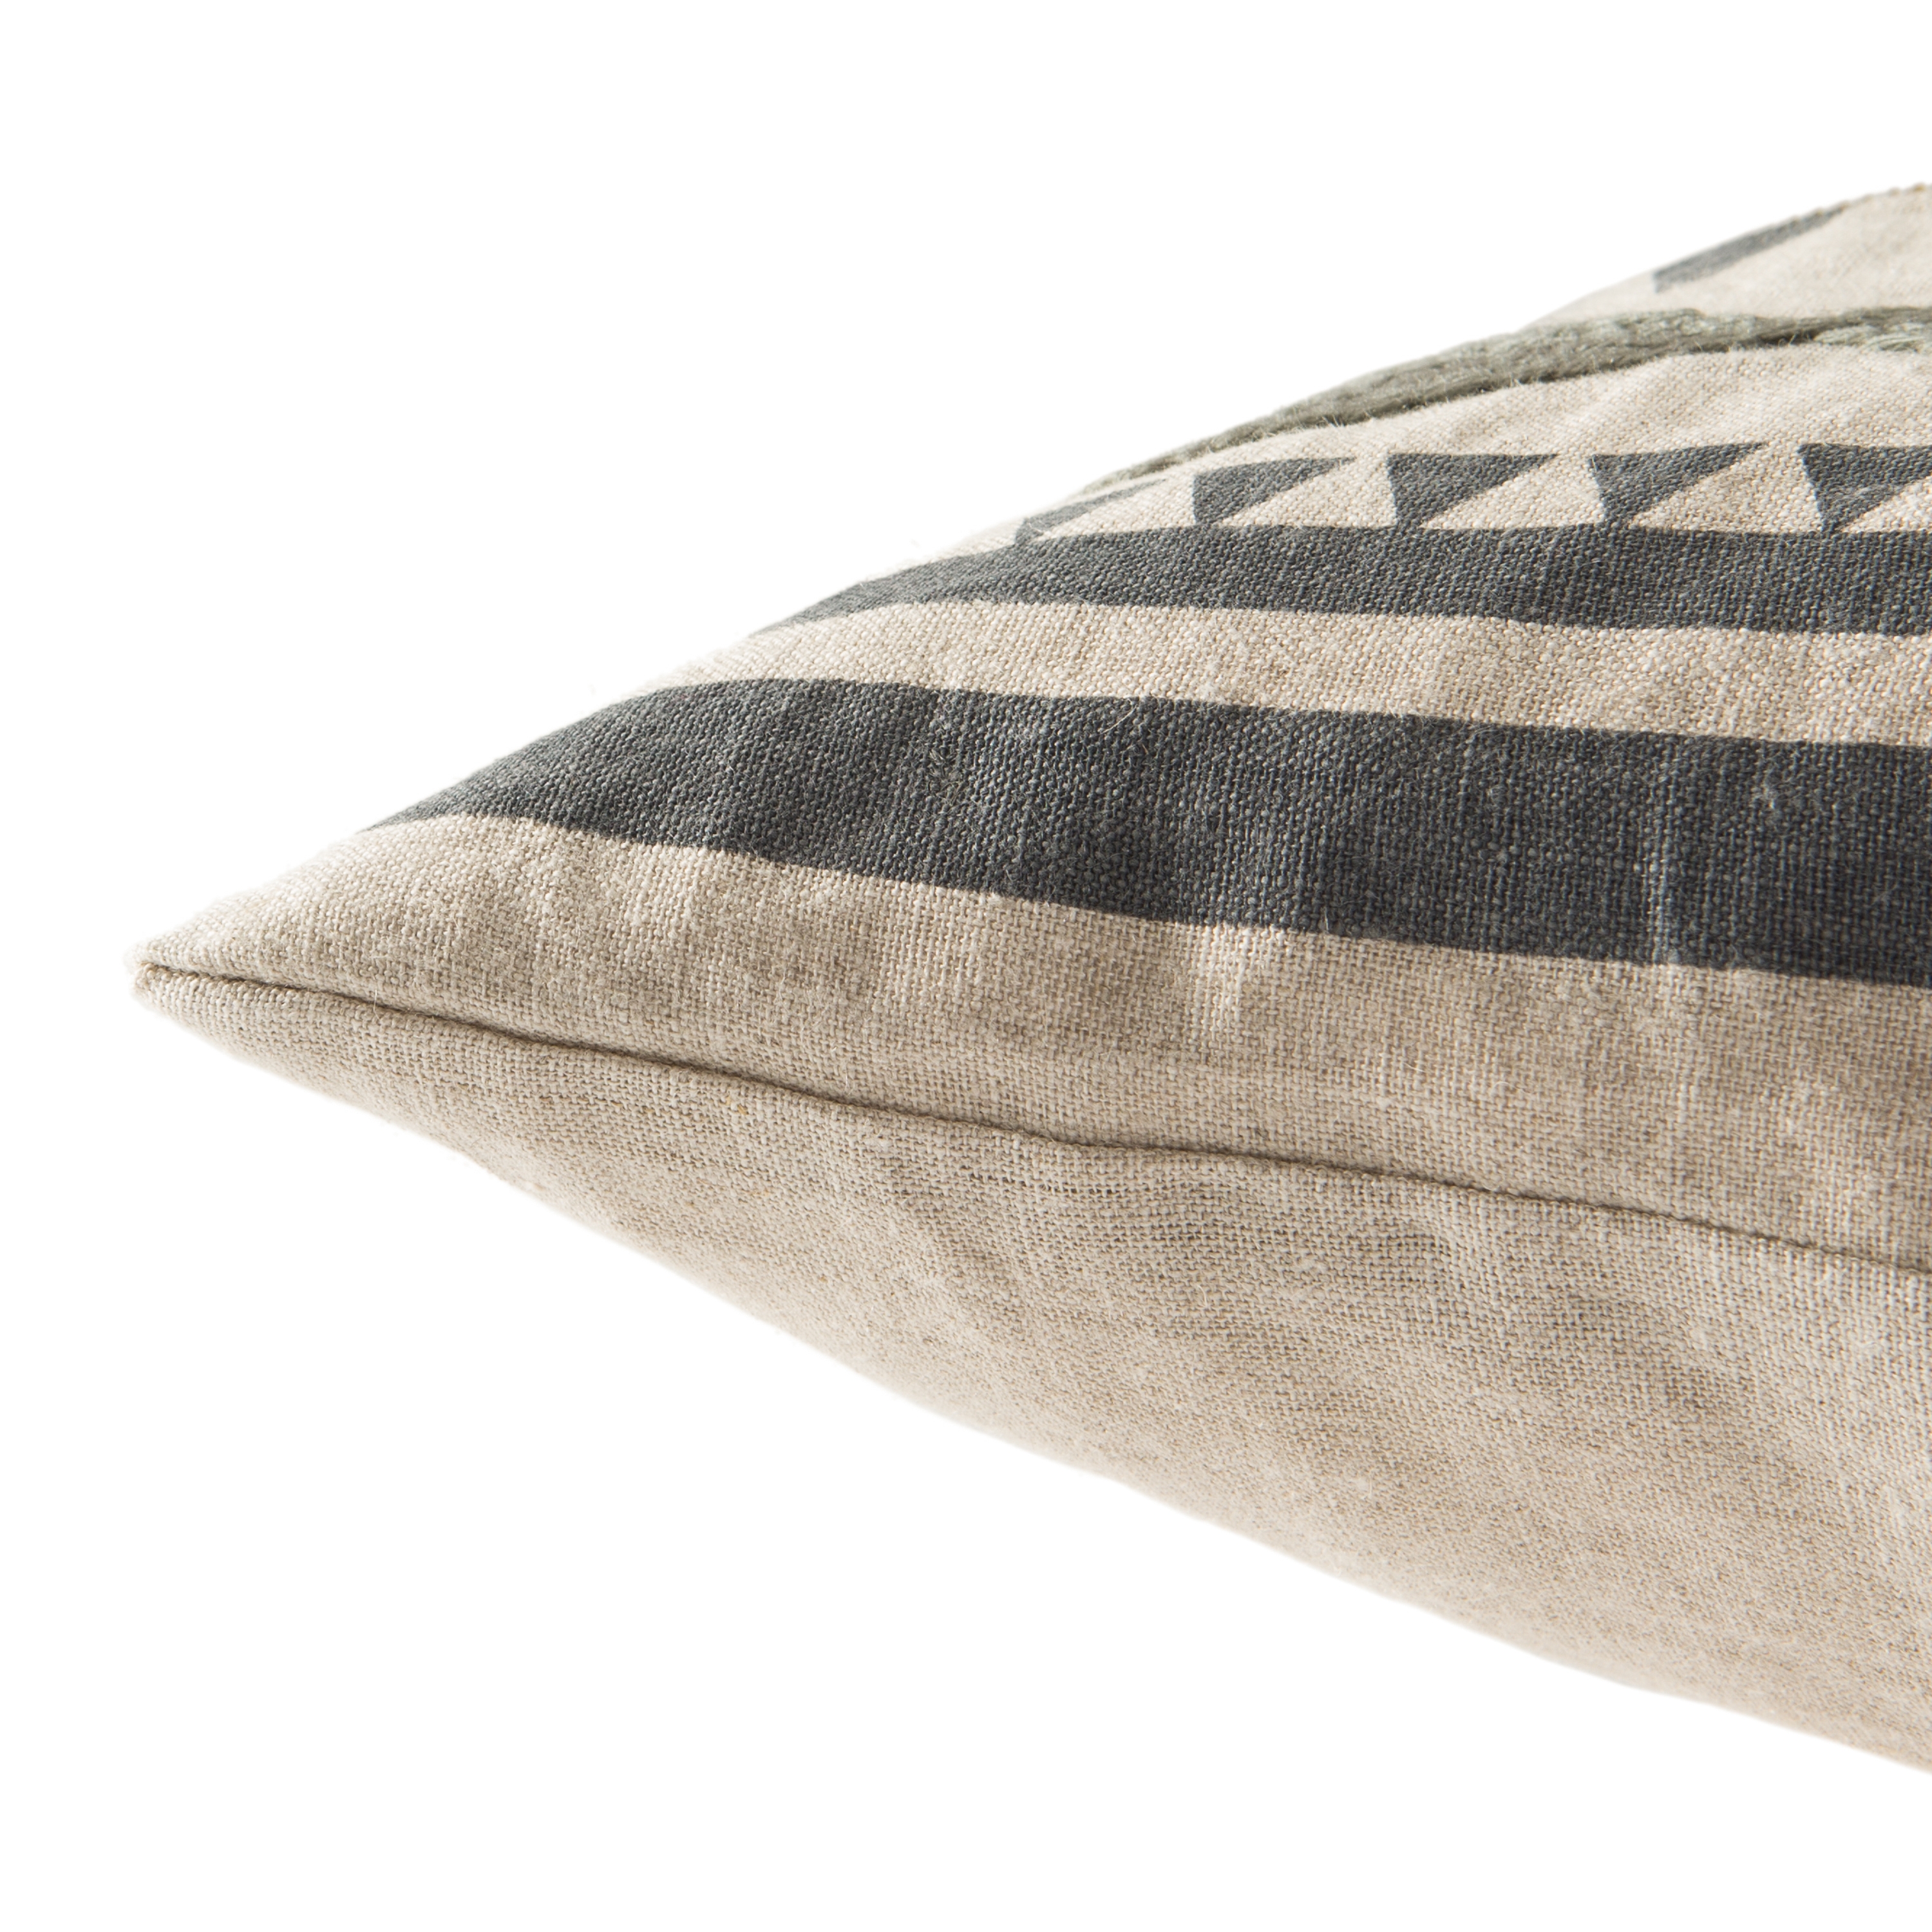 Design (US) Beige 22"X22" Pillow - Image 2